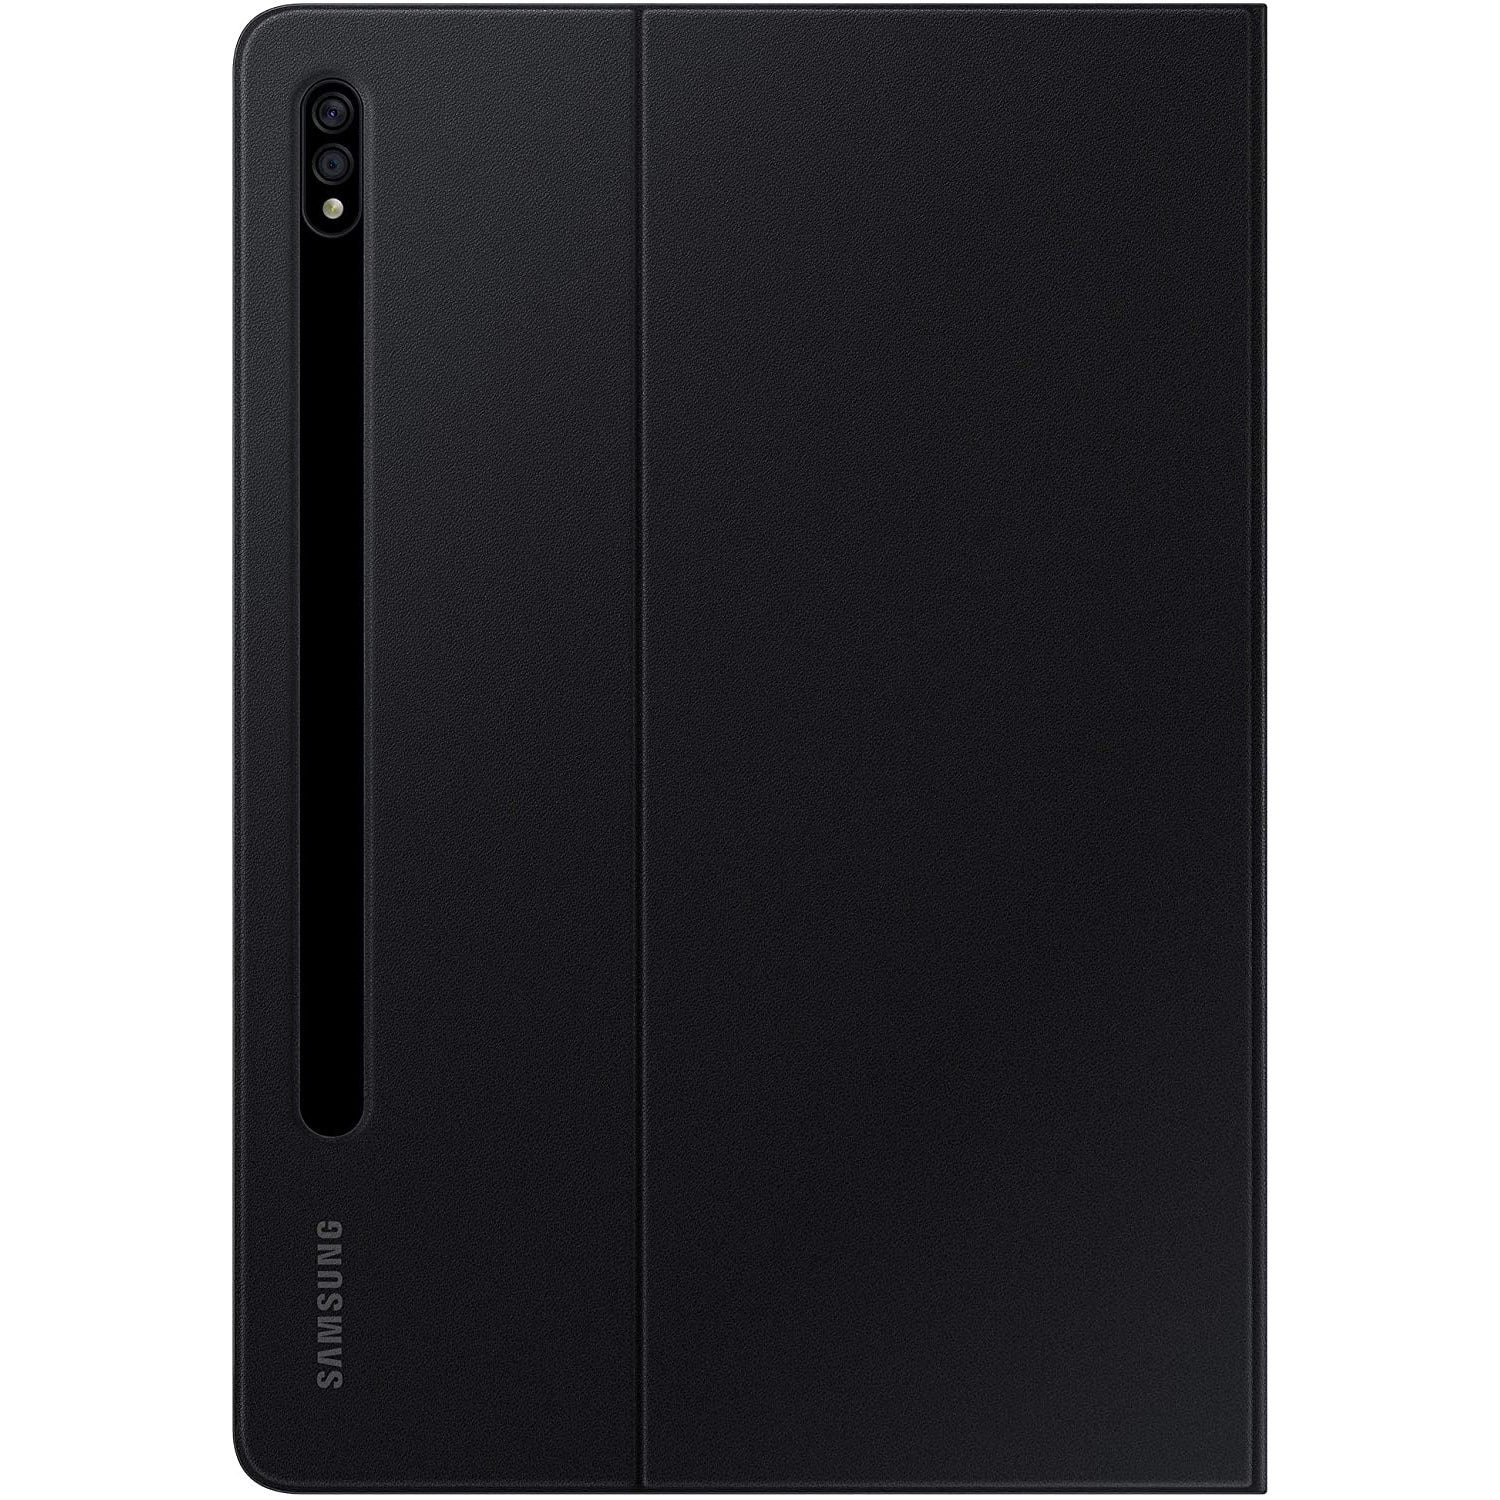 Samsung EF-BT870 Tab S7 Book Cover - Black - Refurbished Pristine